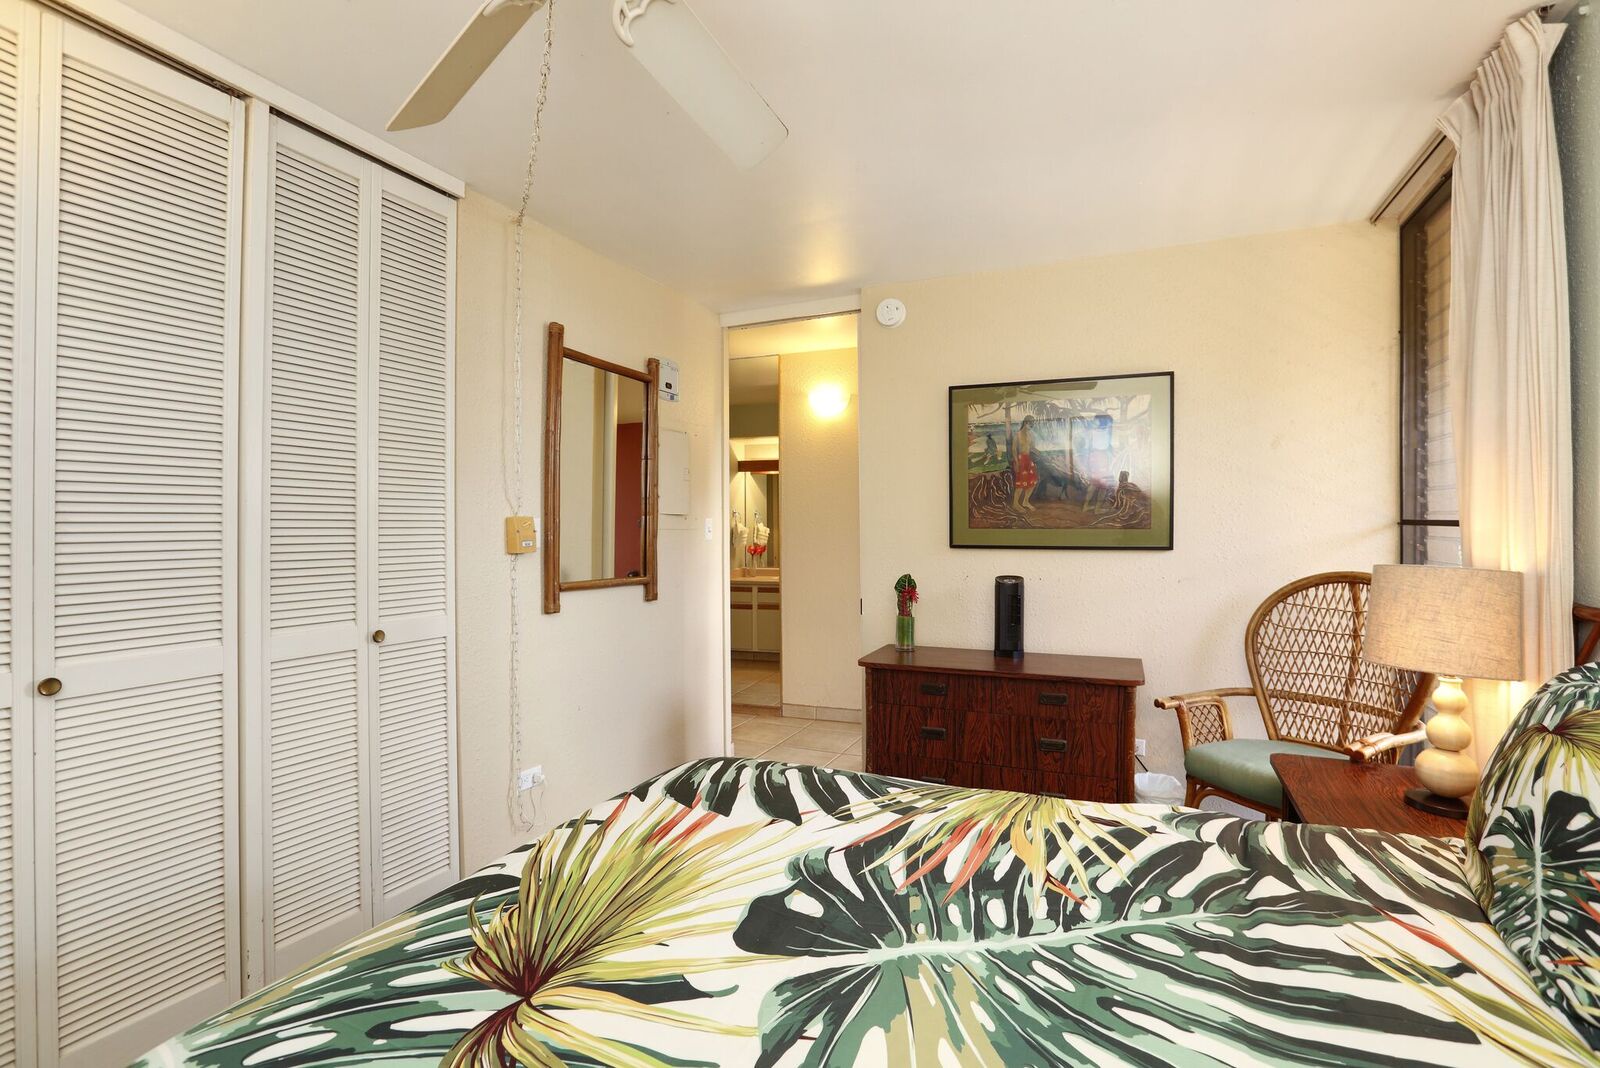 Lahaina Vacation Rentals, Paki Maui 313 - One bedroom unit with plenty of closet space